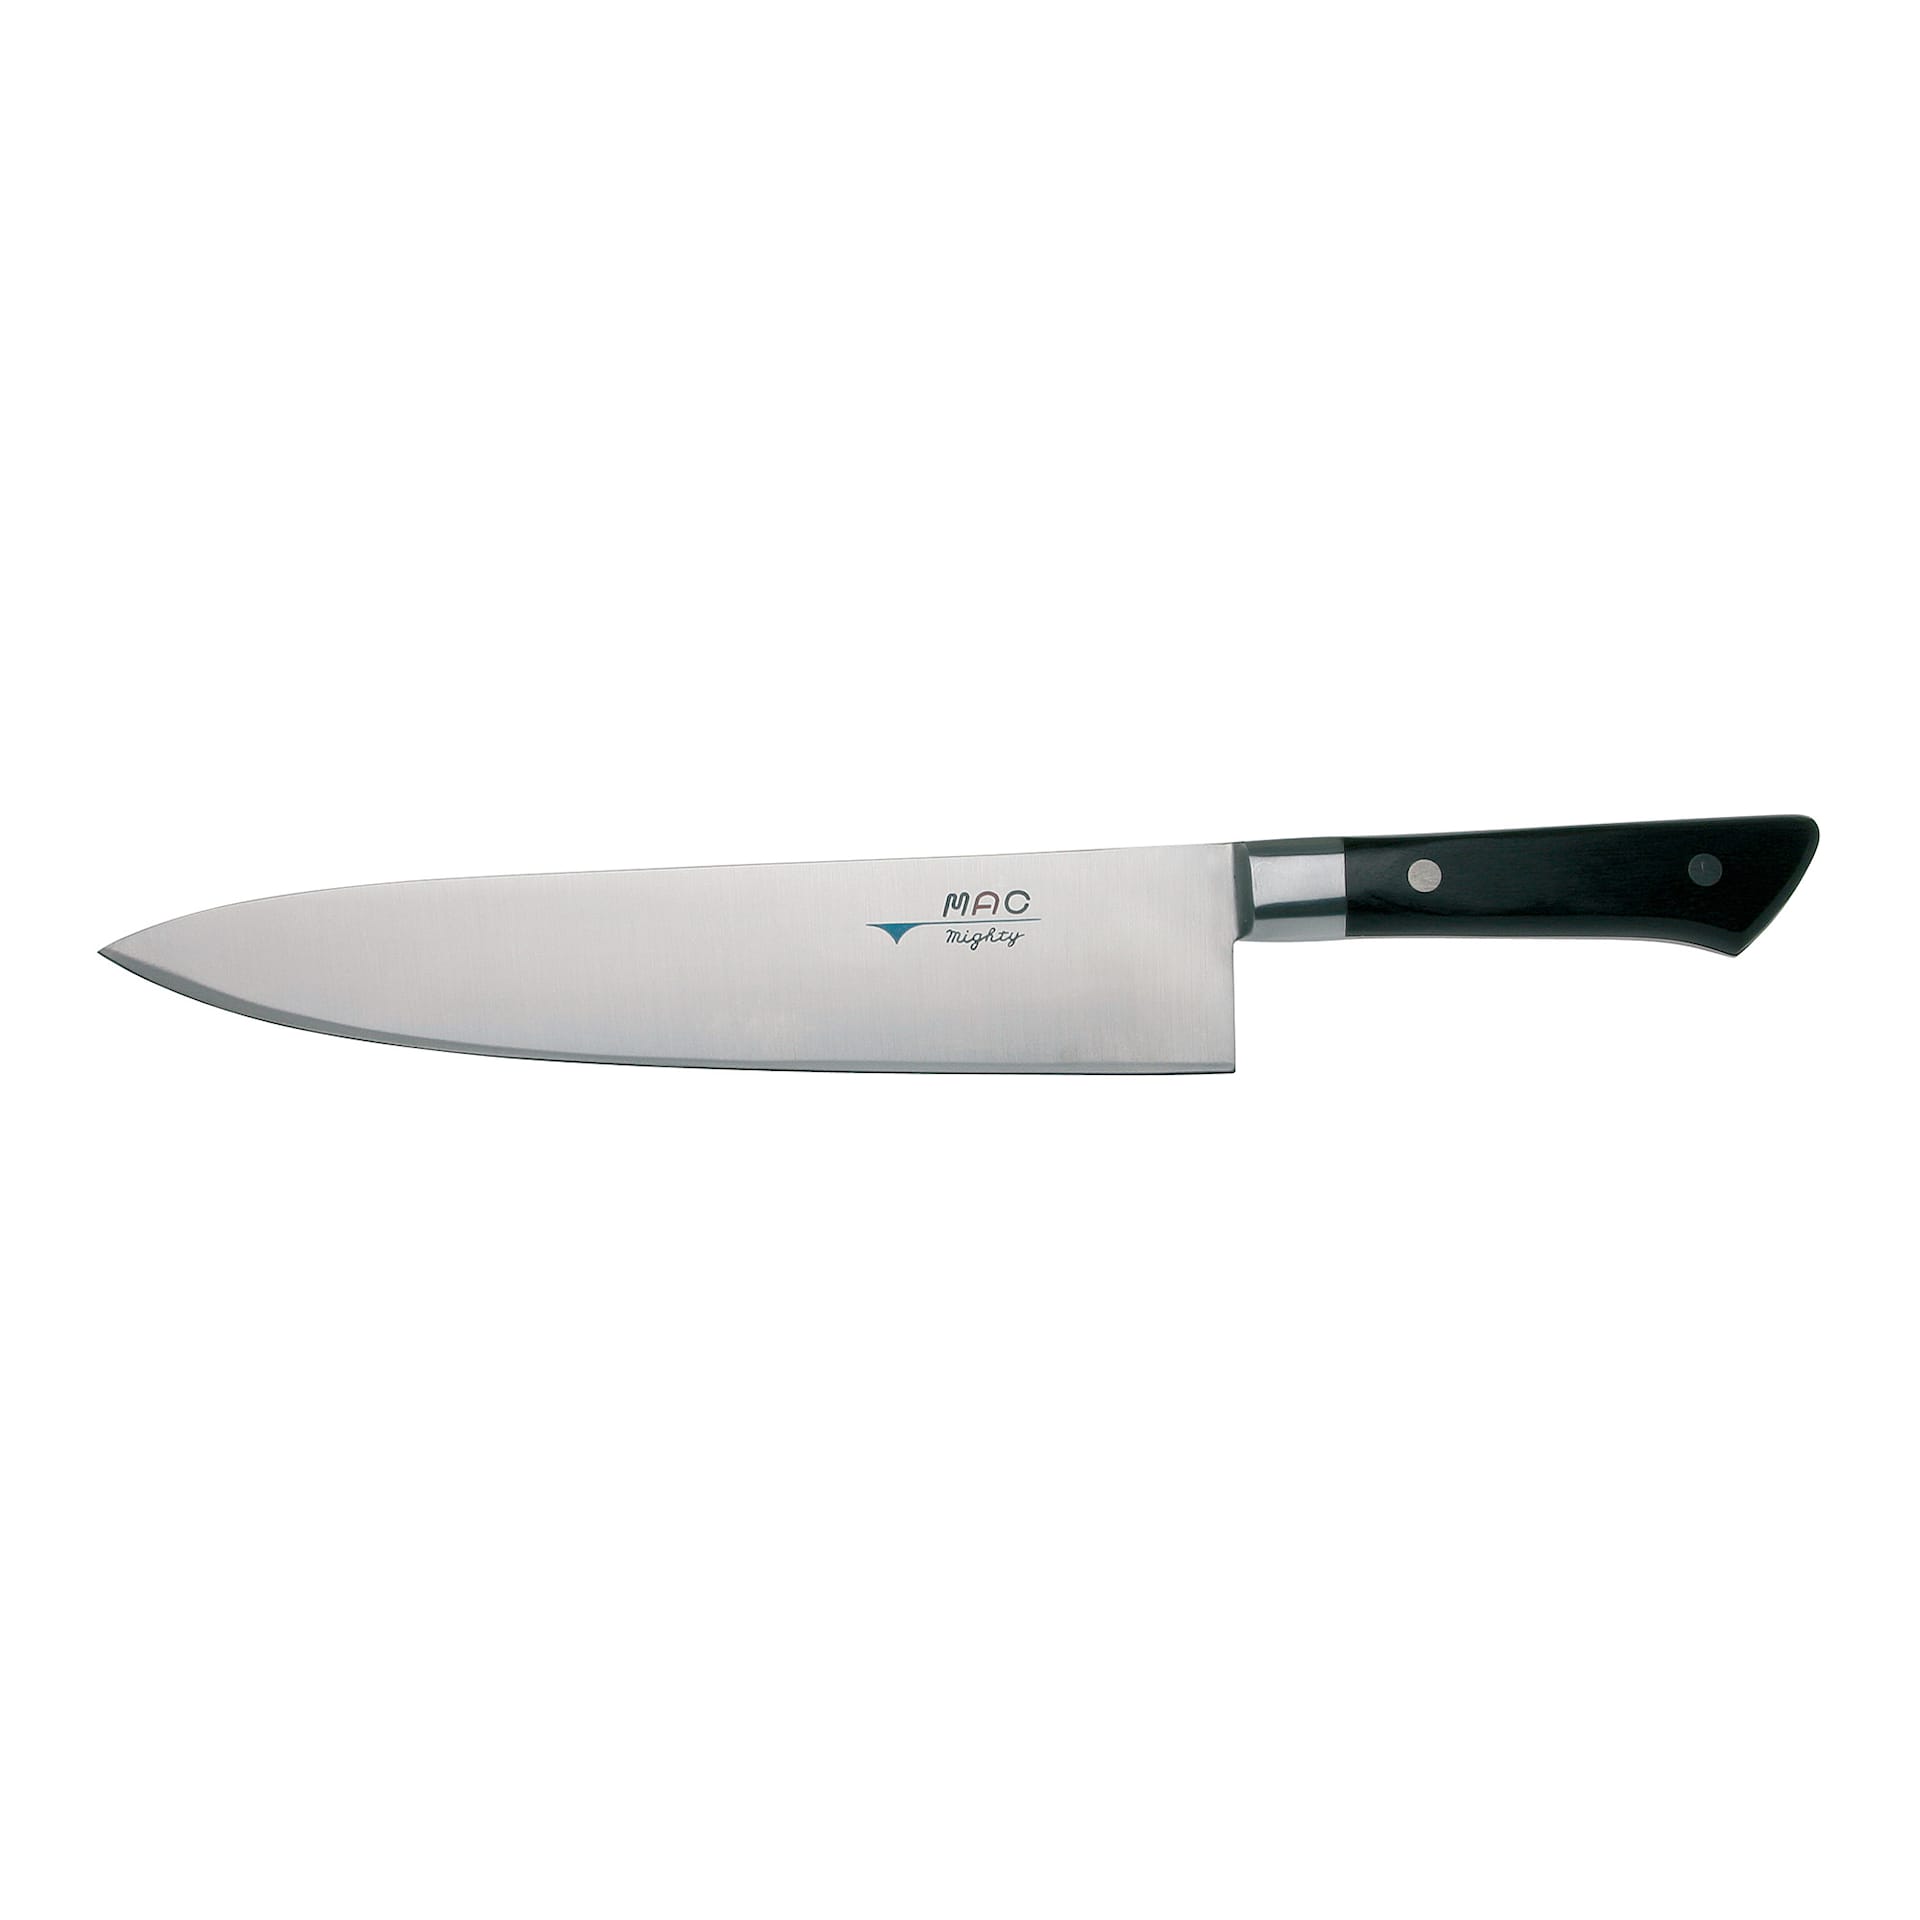 Mighty - Chef's knife, 25 cm - MAC - NO GA